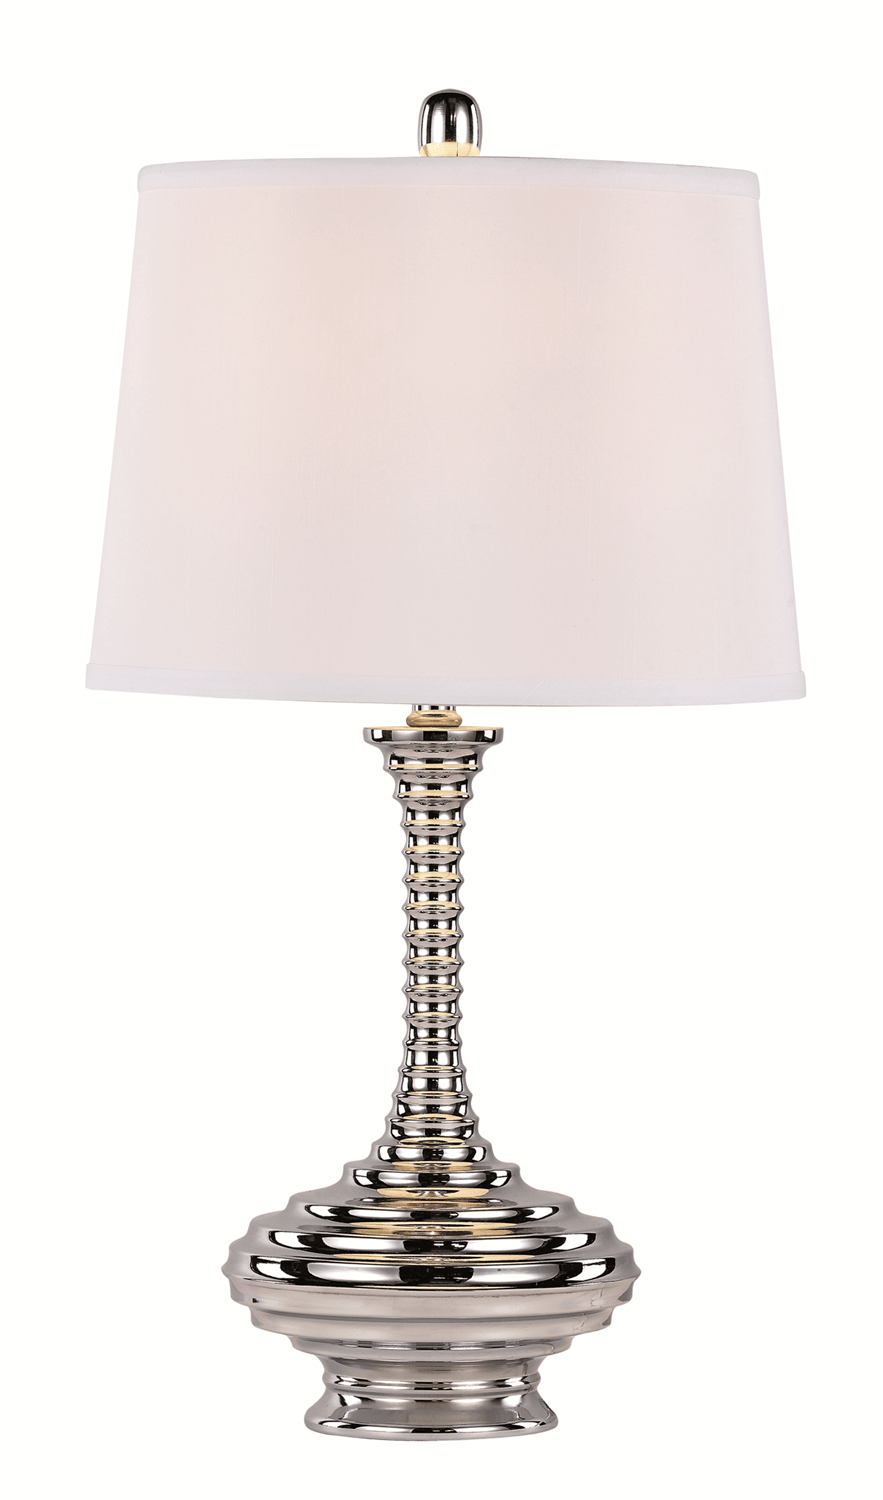 San Fran Table Lamp